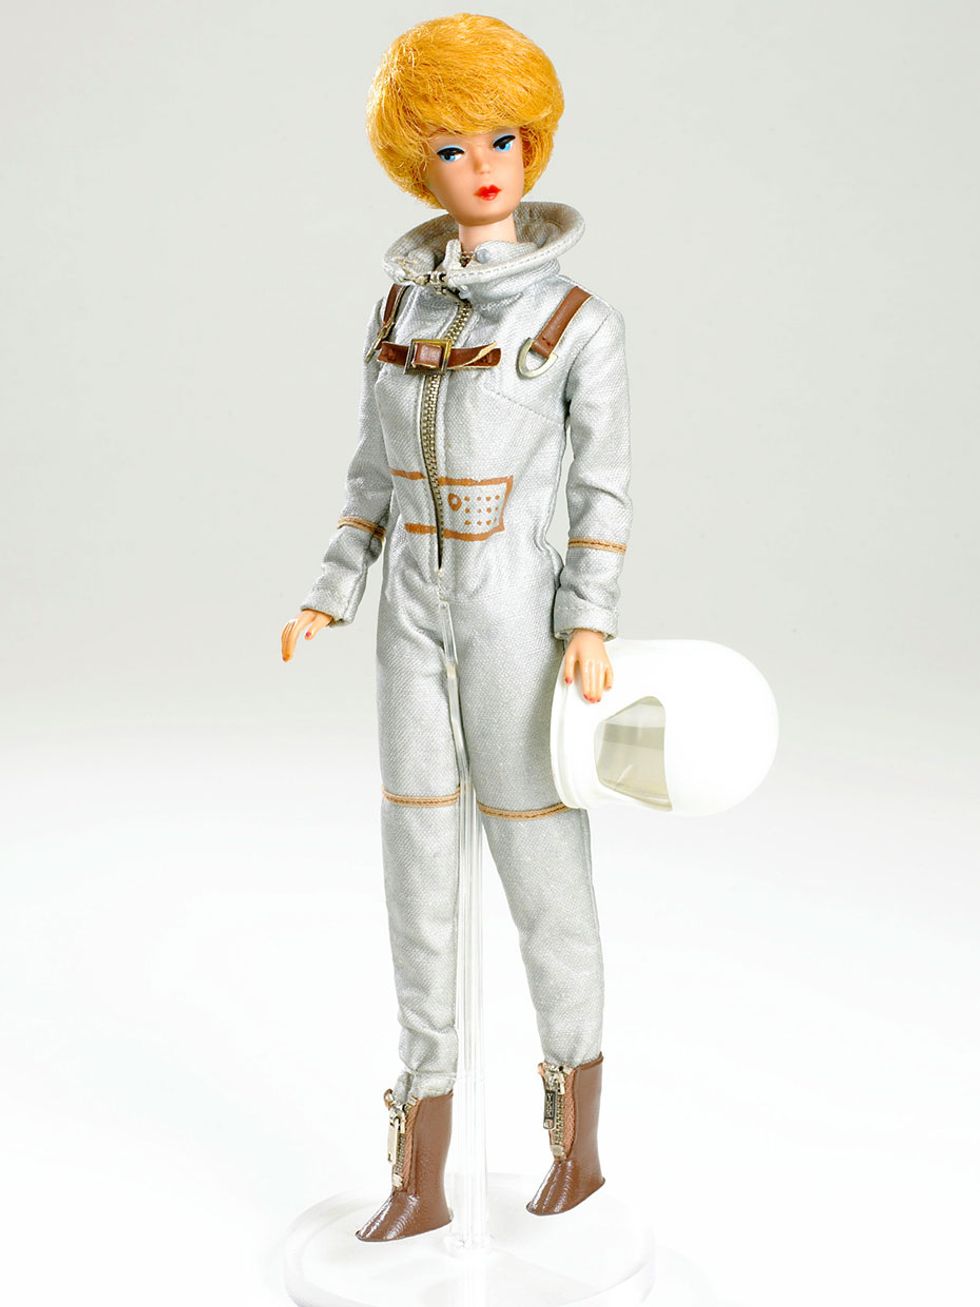 Miss Astronaut Barbie